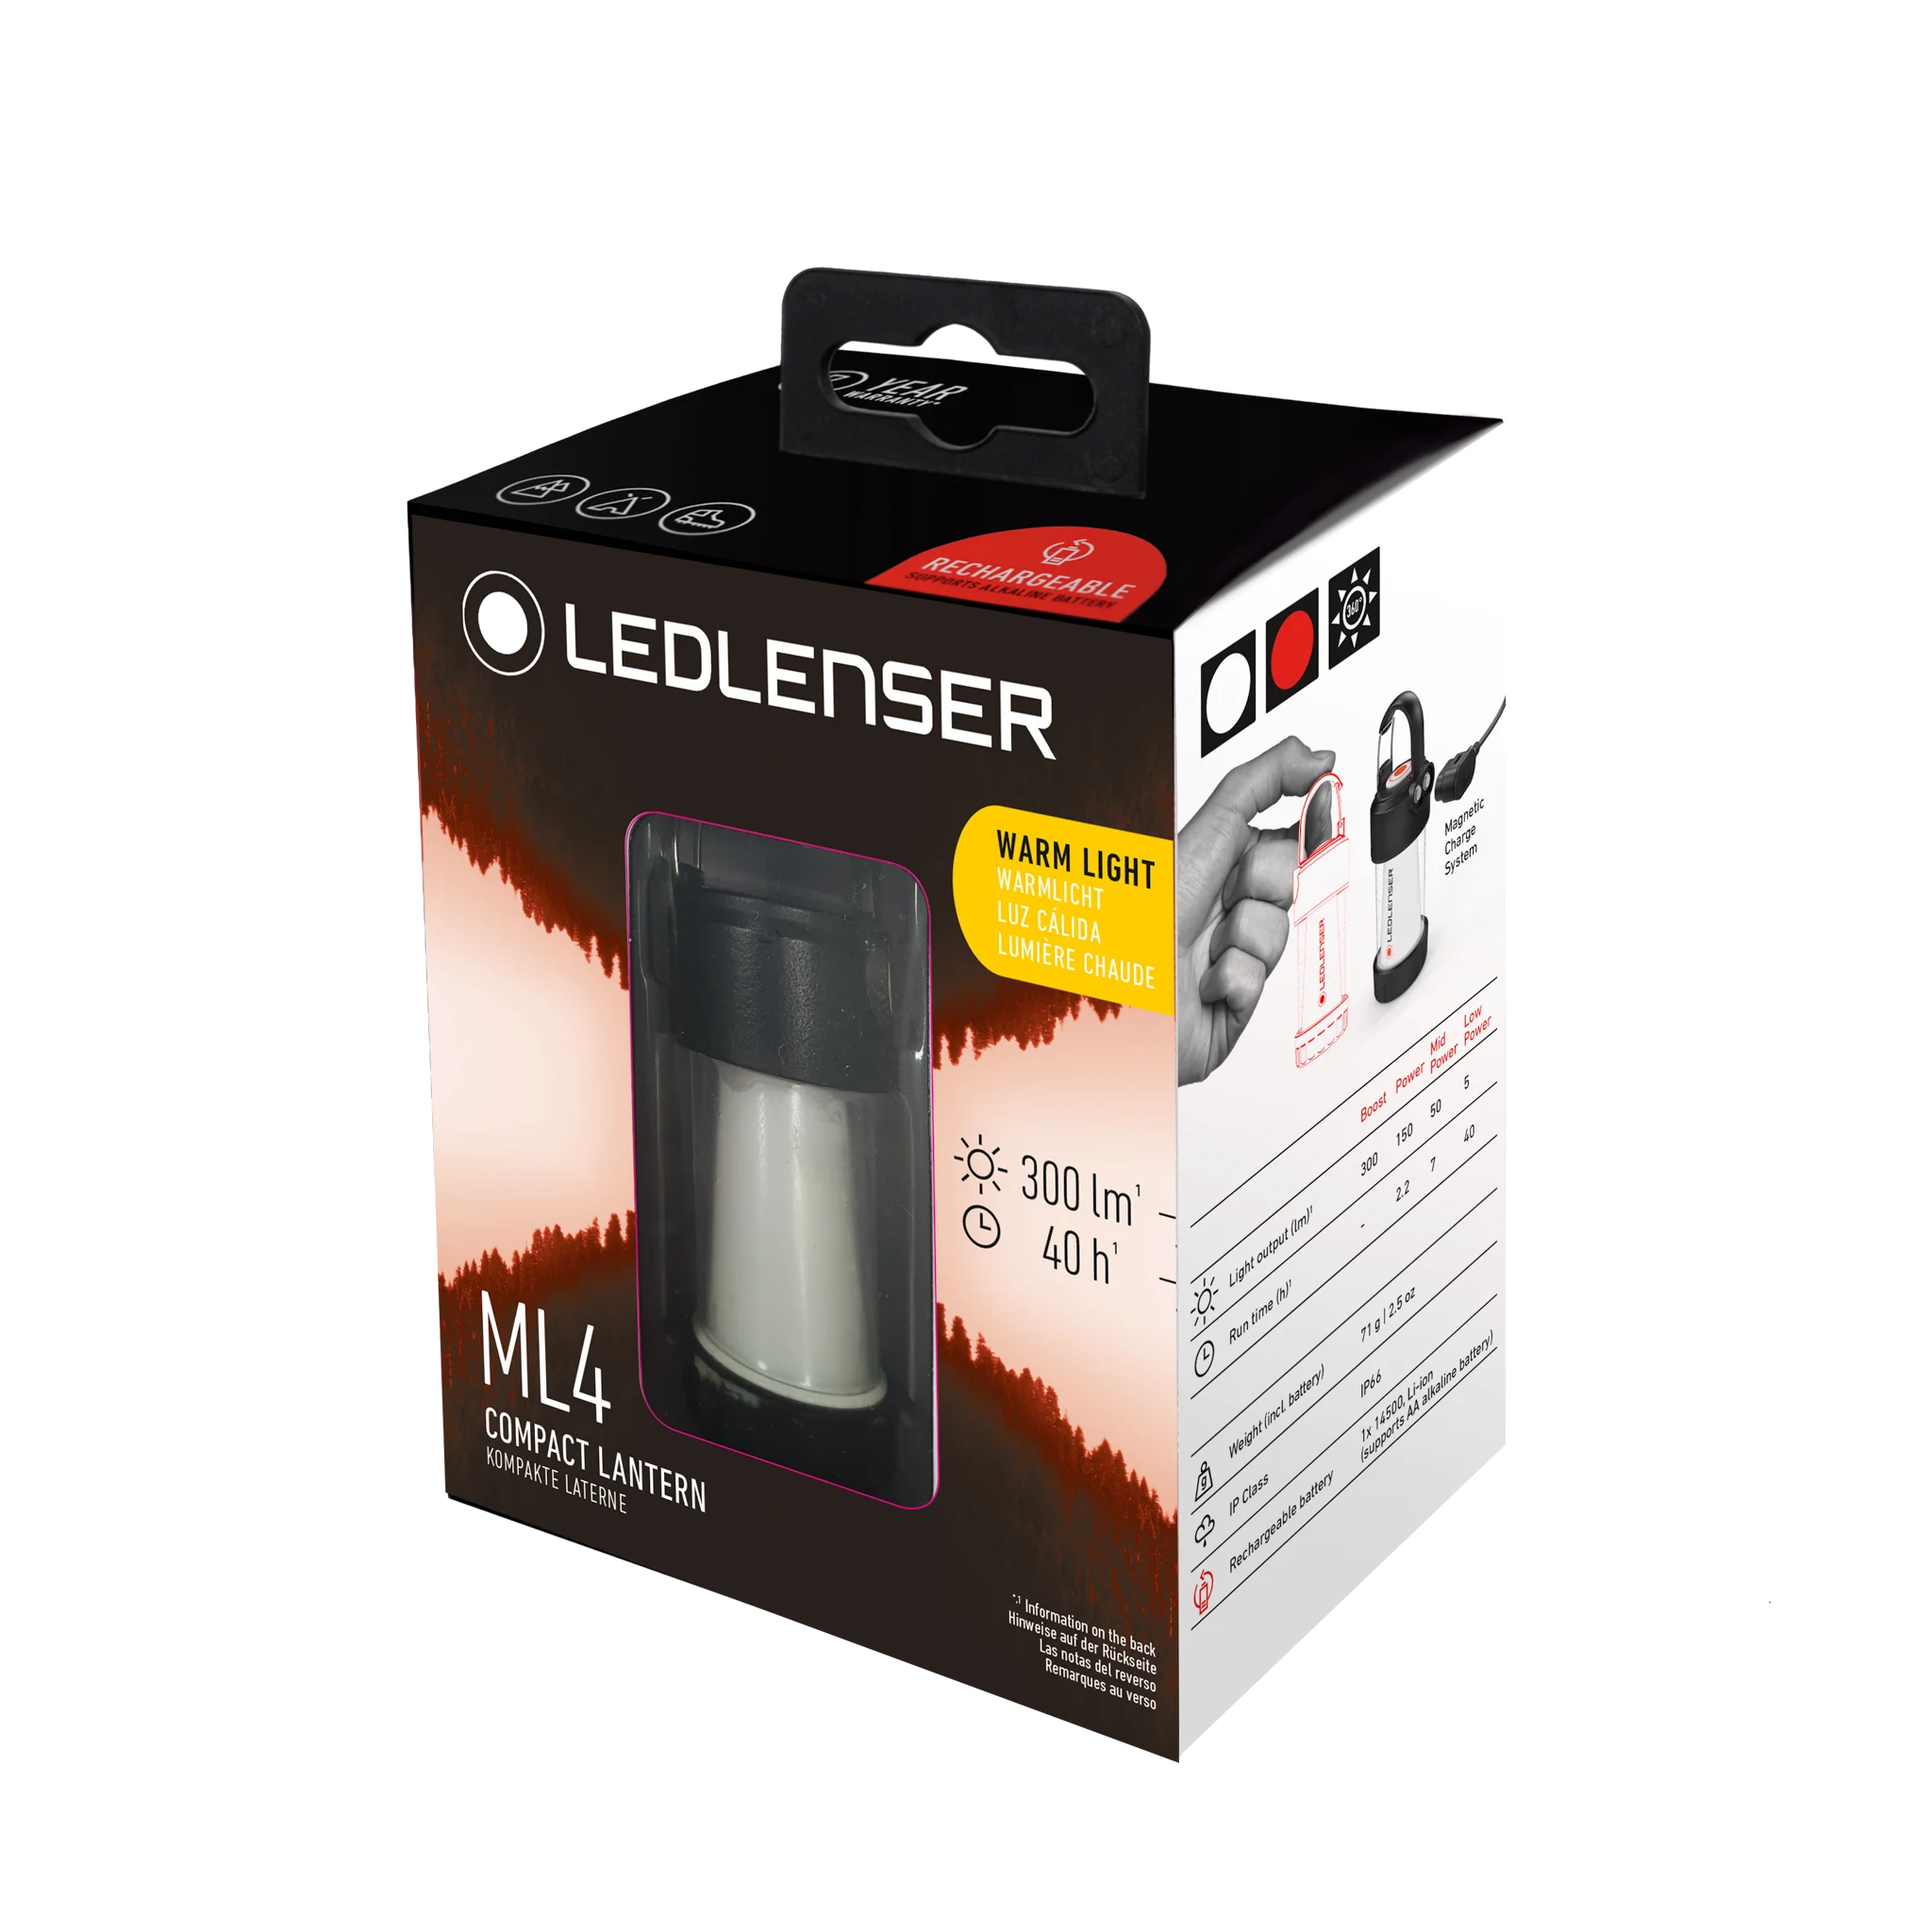 Ledlenser ML4 Compact Camping Lantern - Warm Light